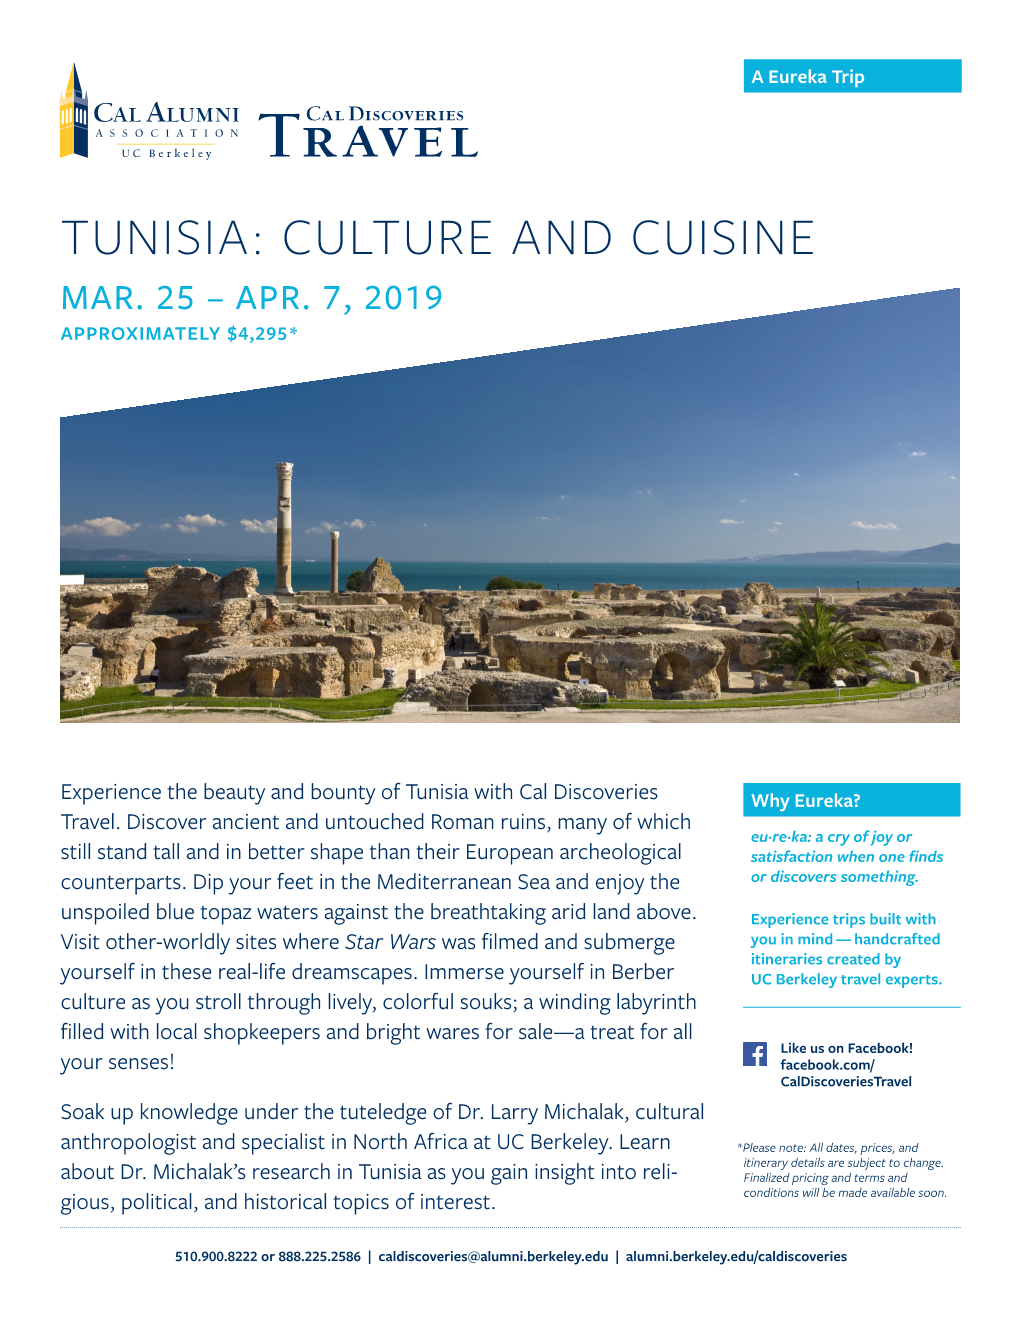 Tunisia: Culture and Cuisine Mar